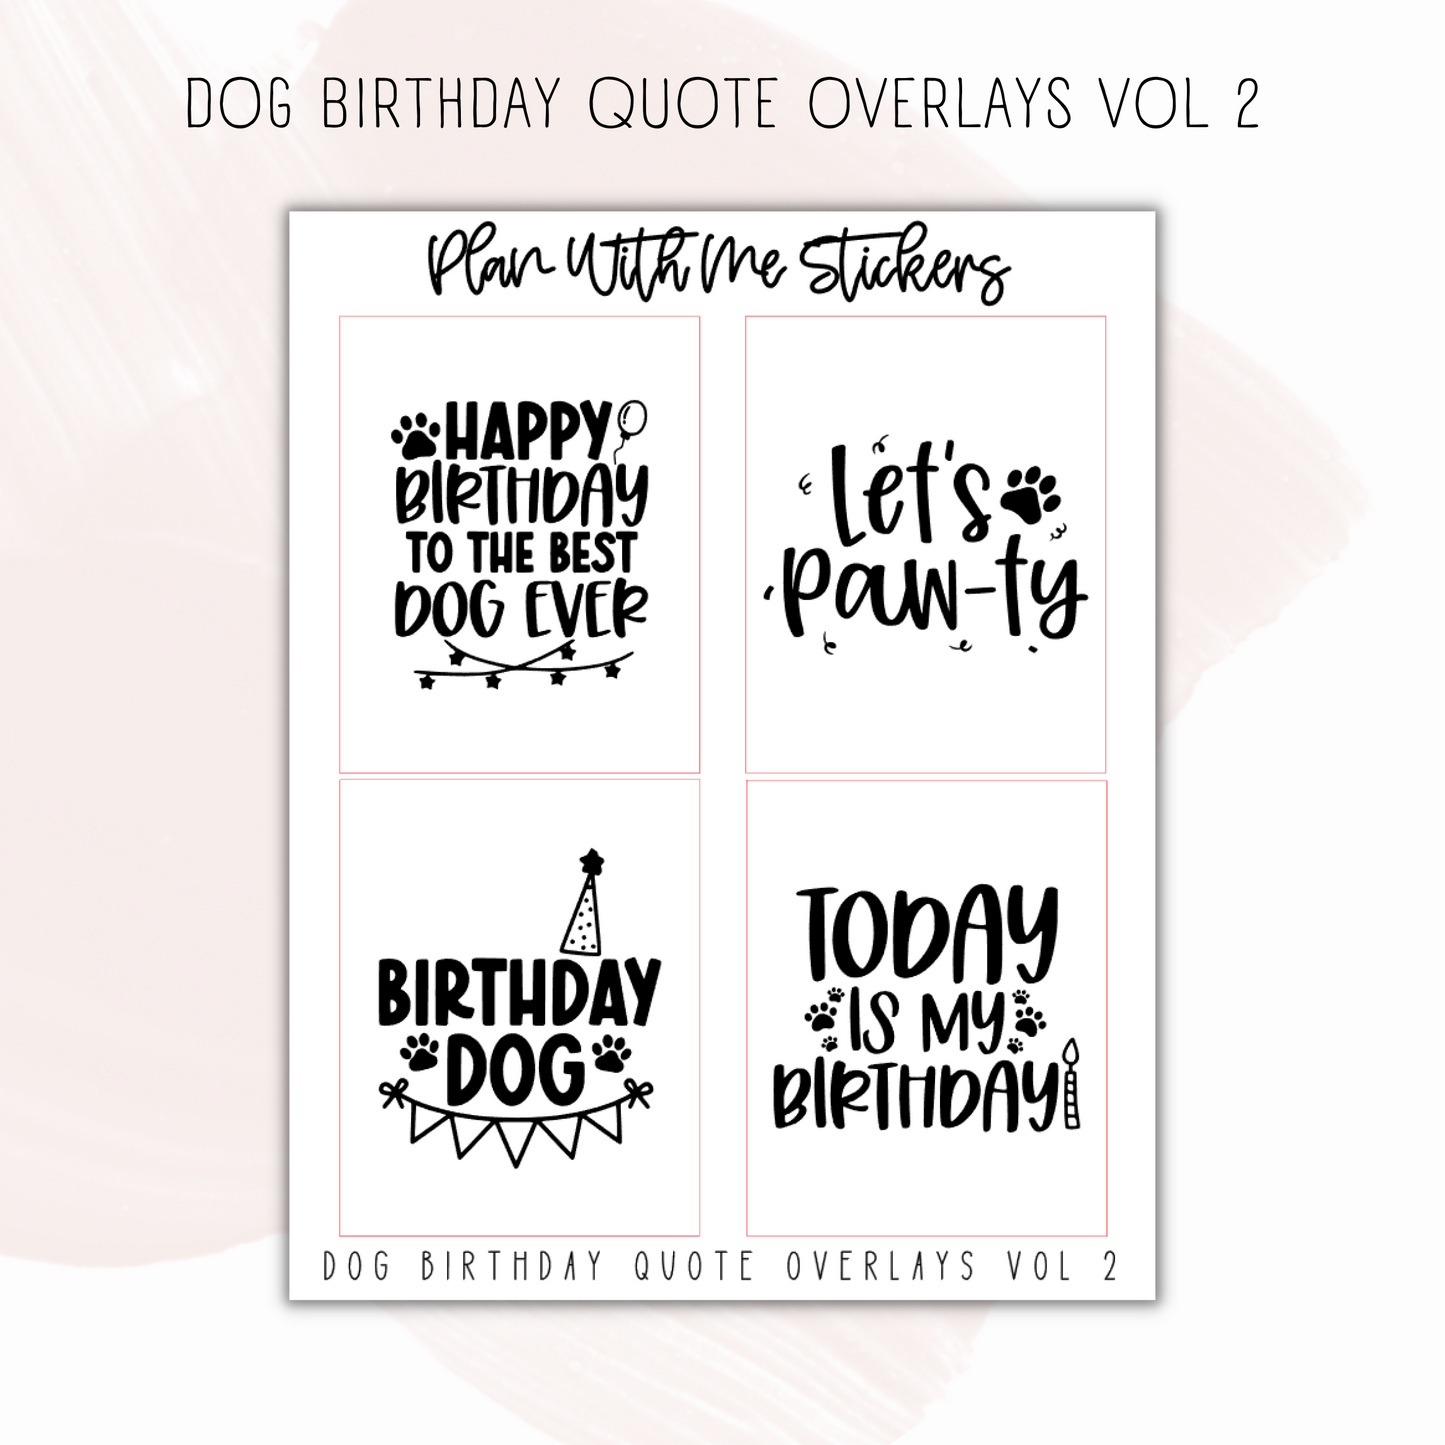 Dog Birthday Quote Overlays Vol 2